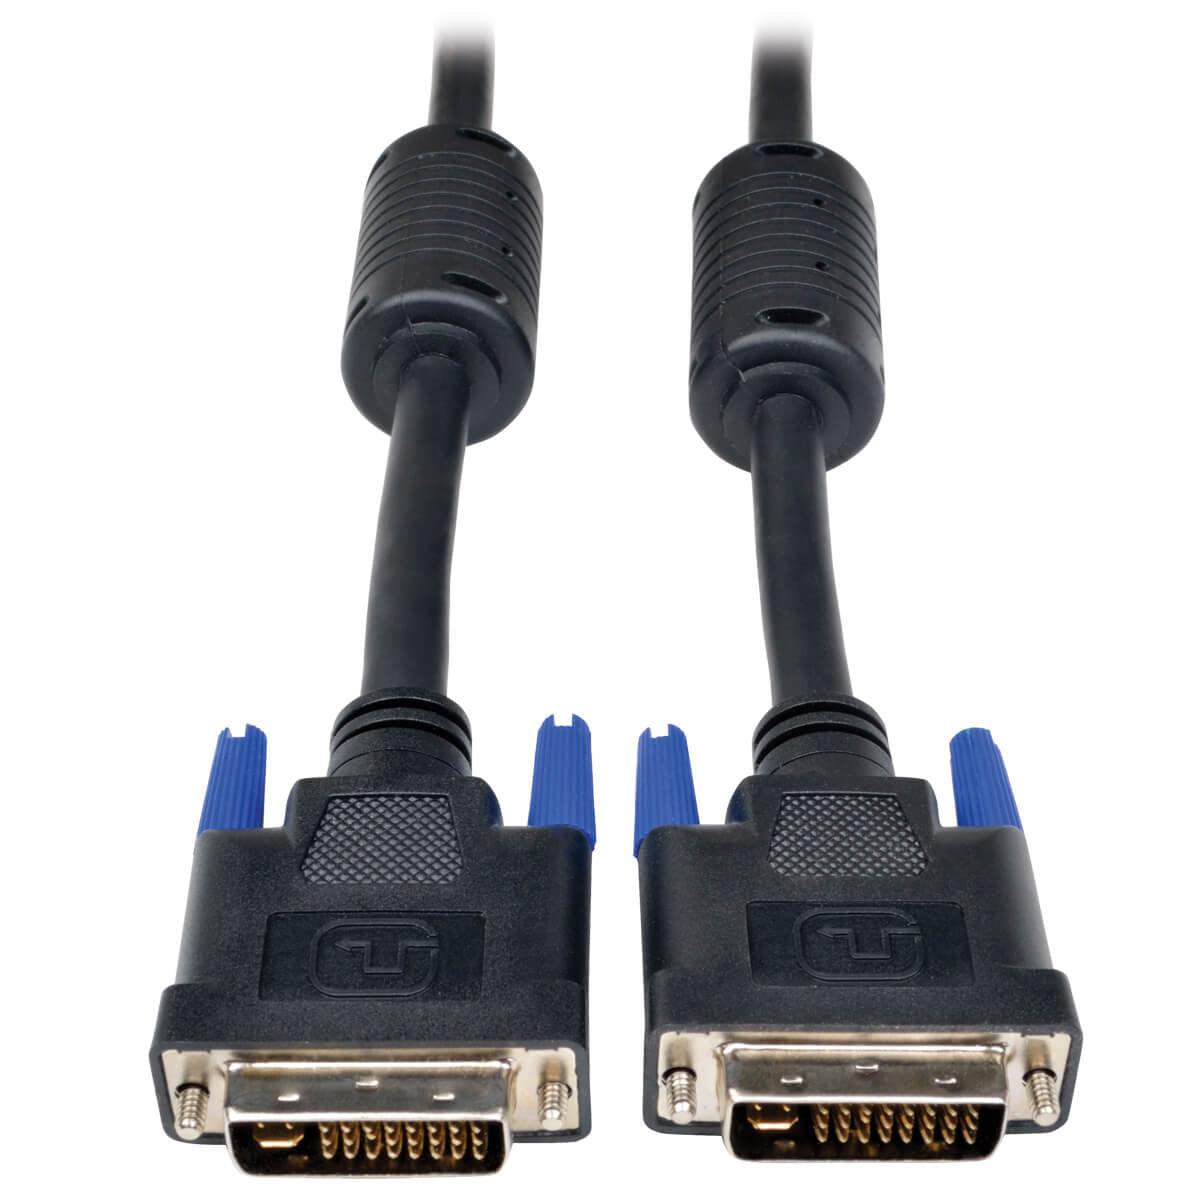 Tripp Lite P560-006-Dli Dvi-I Dual Link Digital And Analog Monitor Cable (Dvi-I M/M), 6 Ft. (1.83 M)